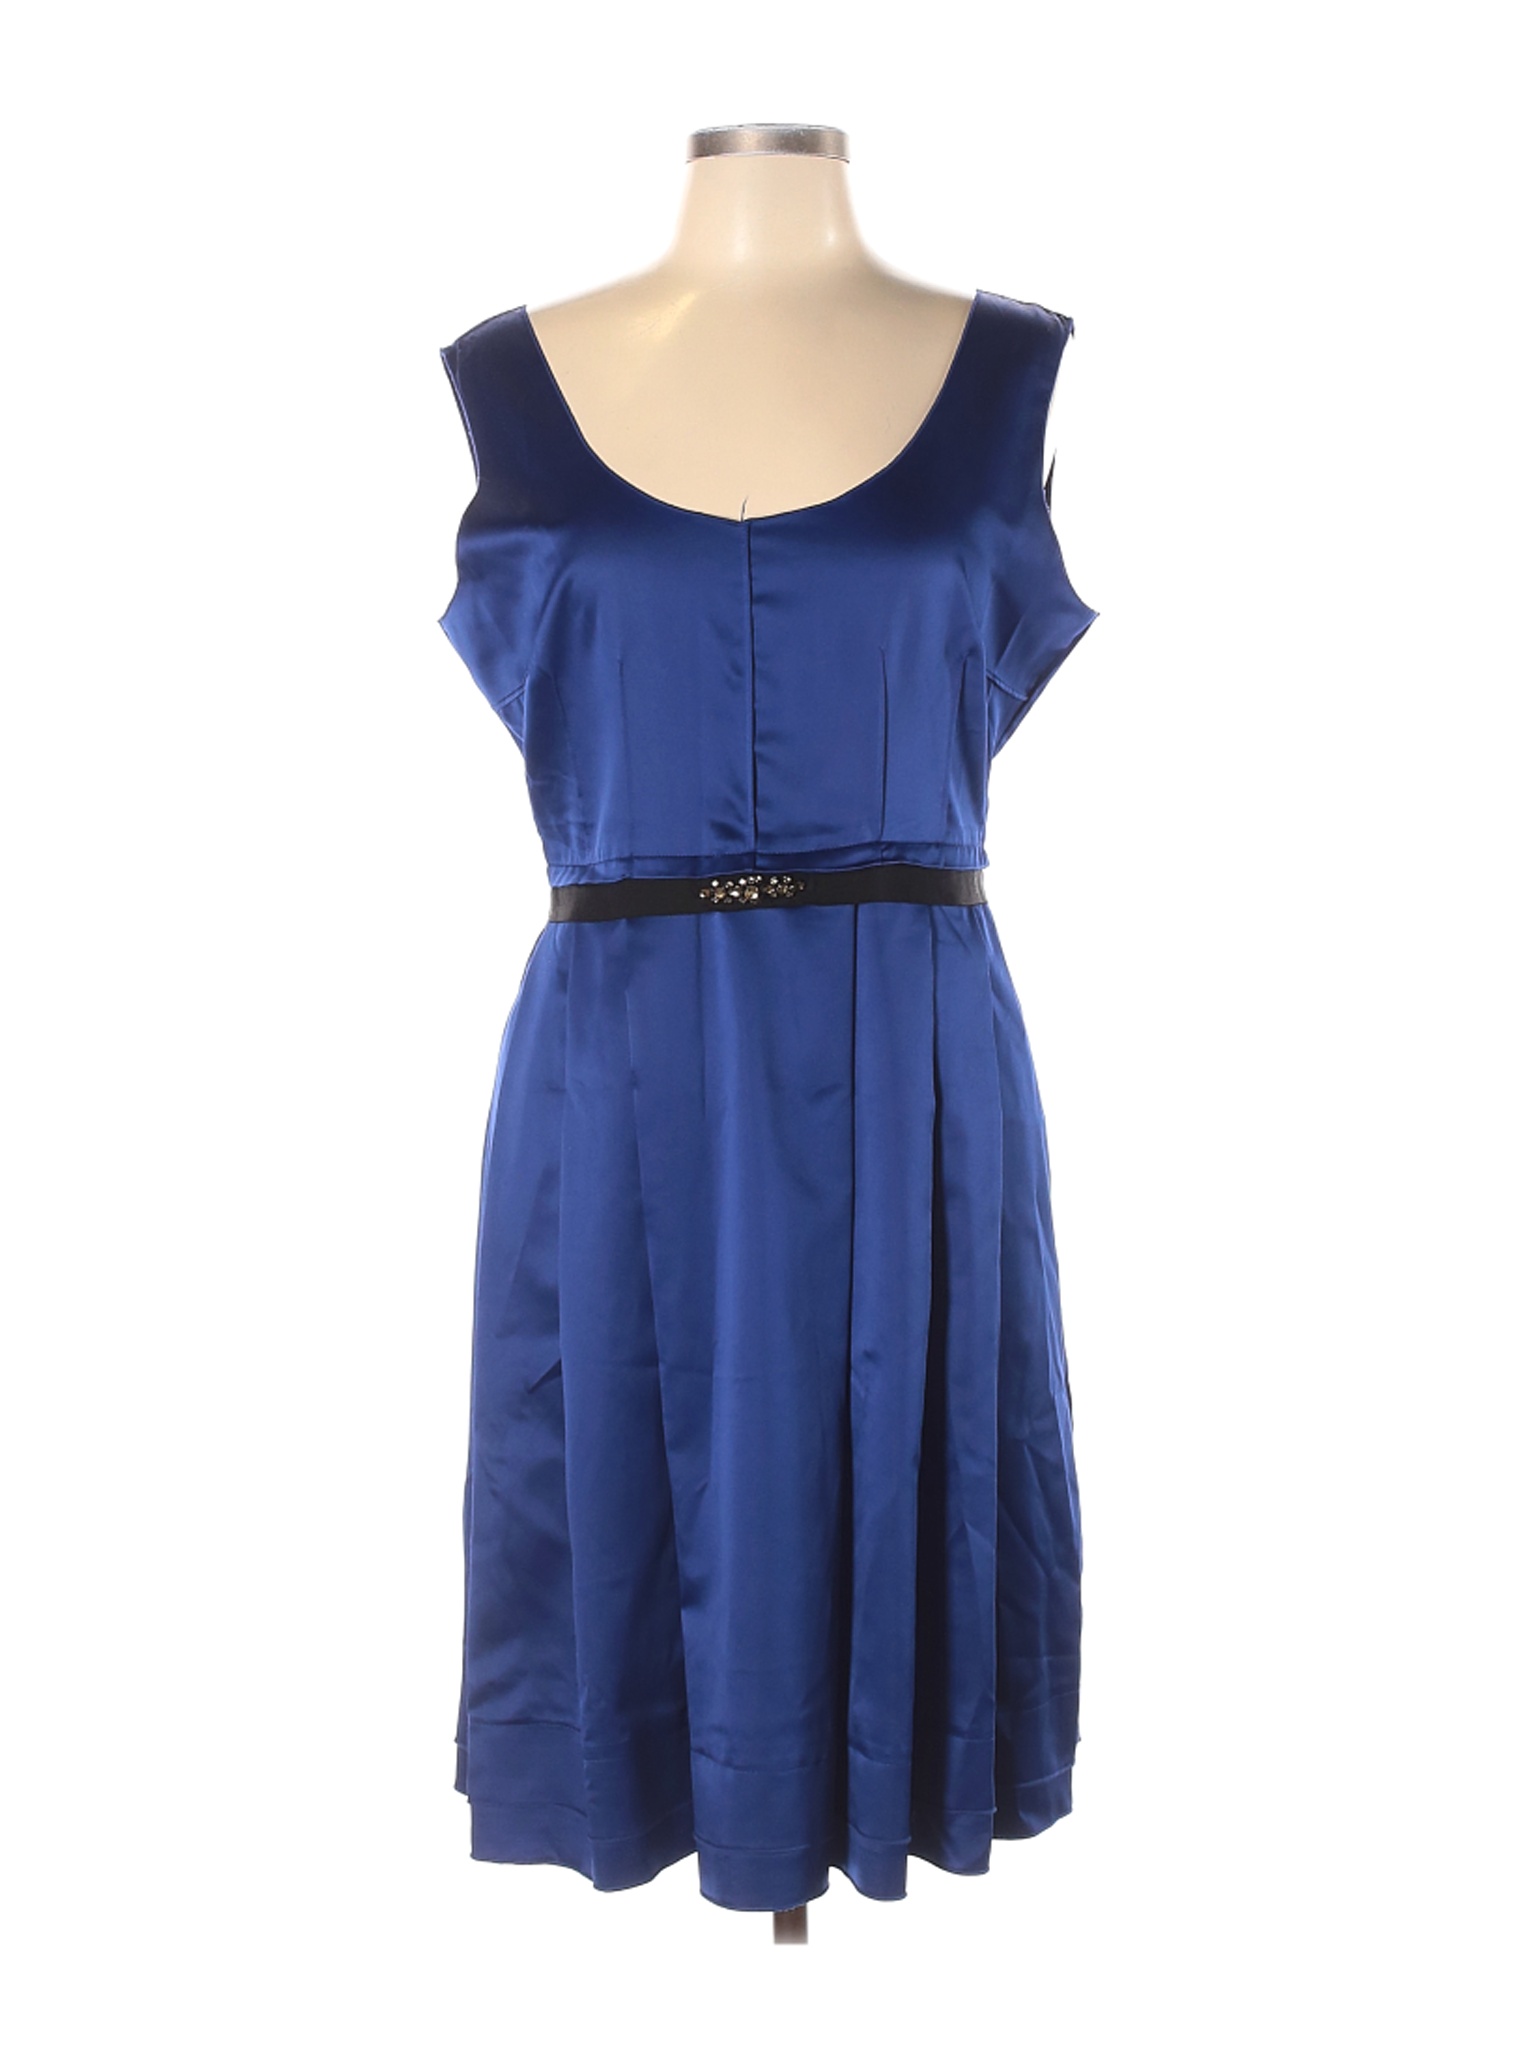 Simply Vera Vera Wang Women Blue Cocktail Dress 12 | eBay